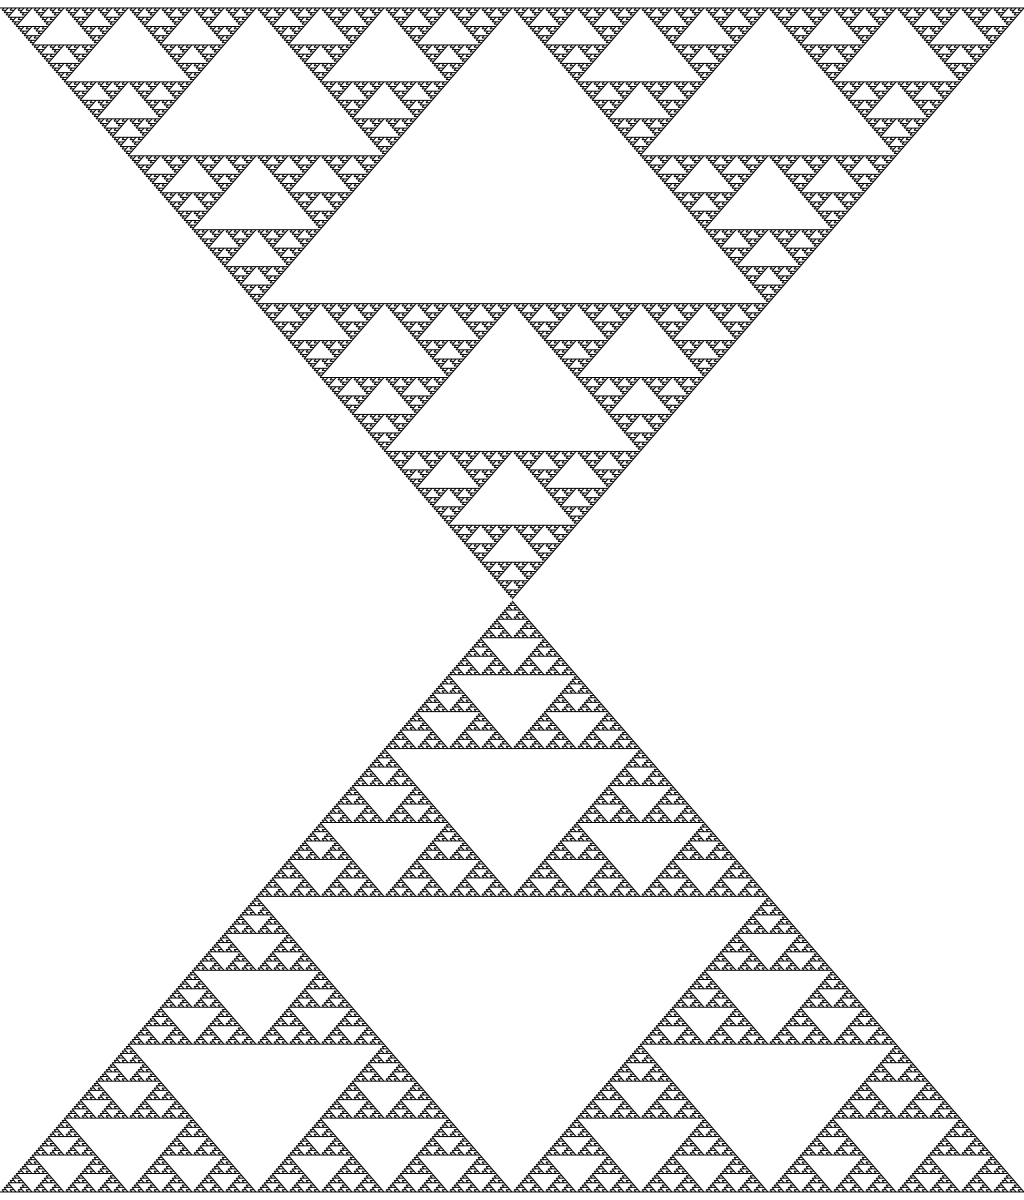 test/reference/shape-sierpinski.base.rgb24.ref.png